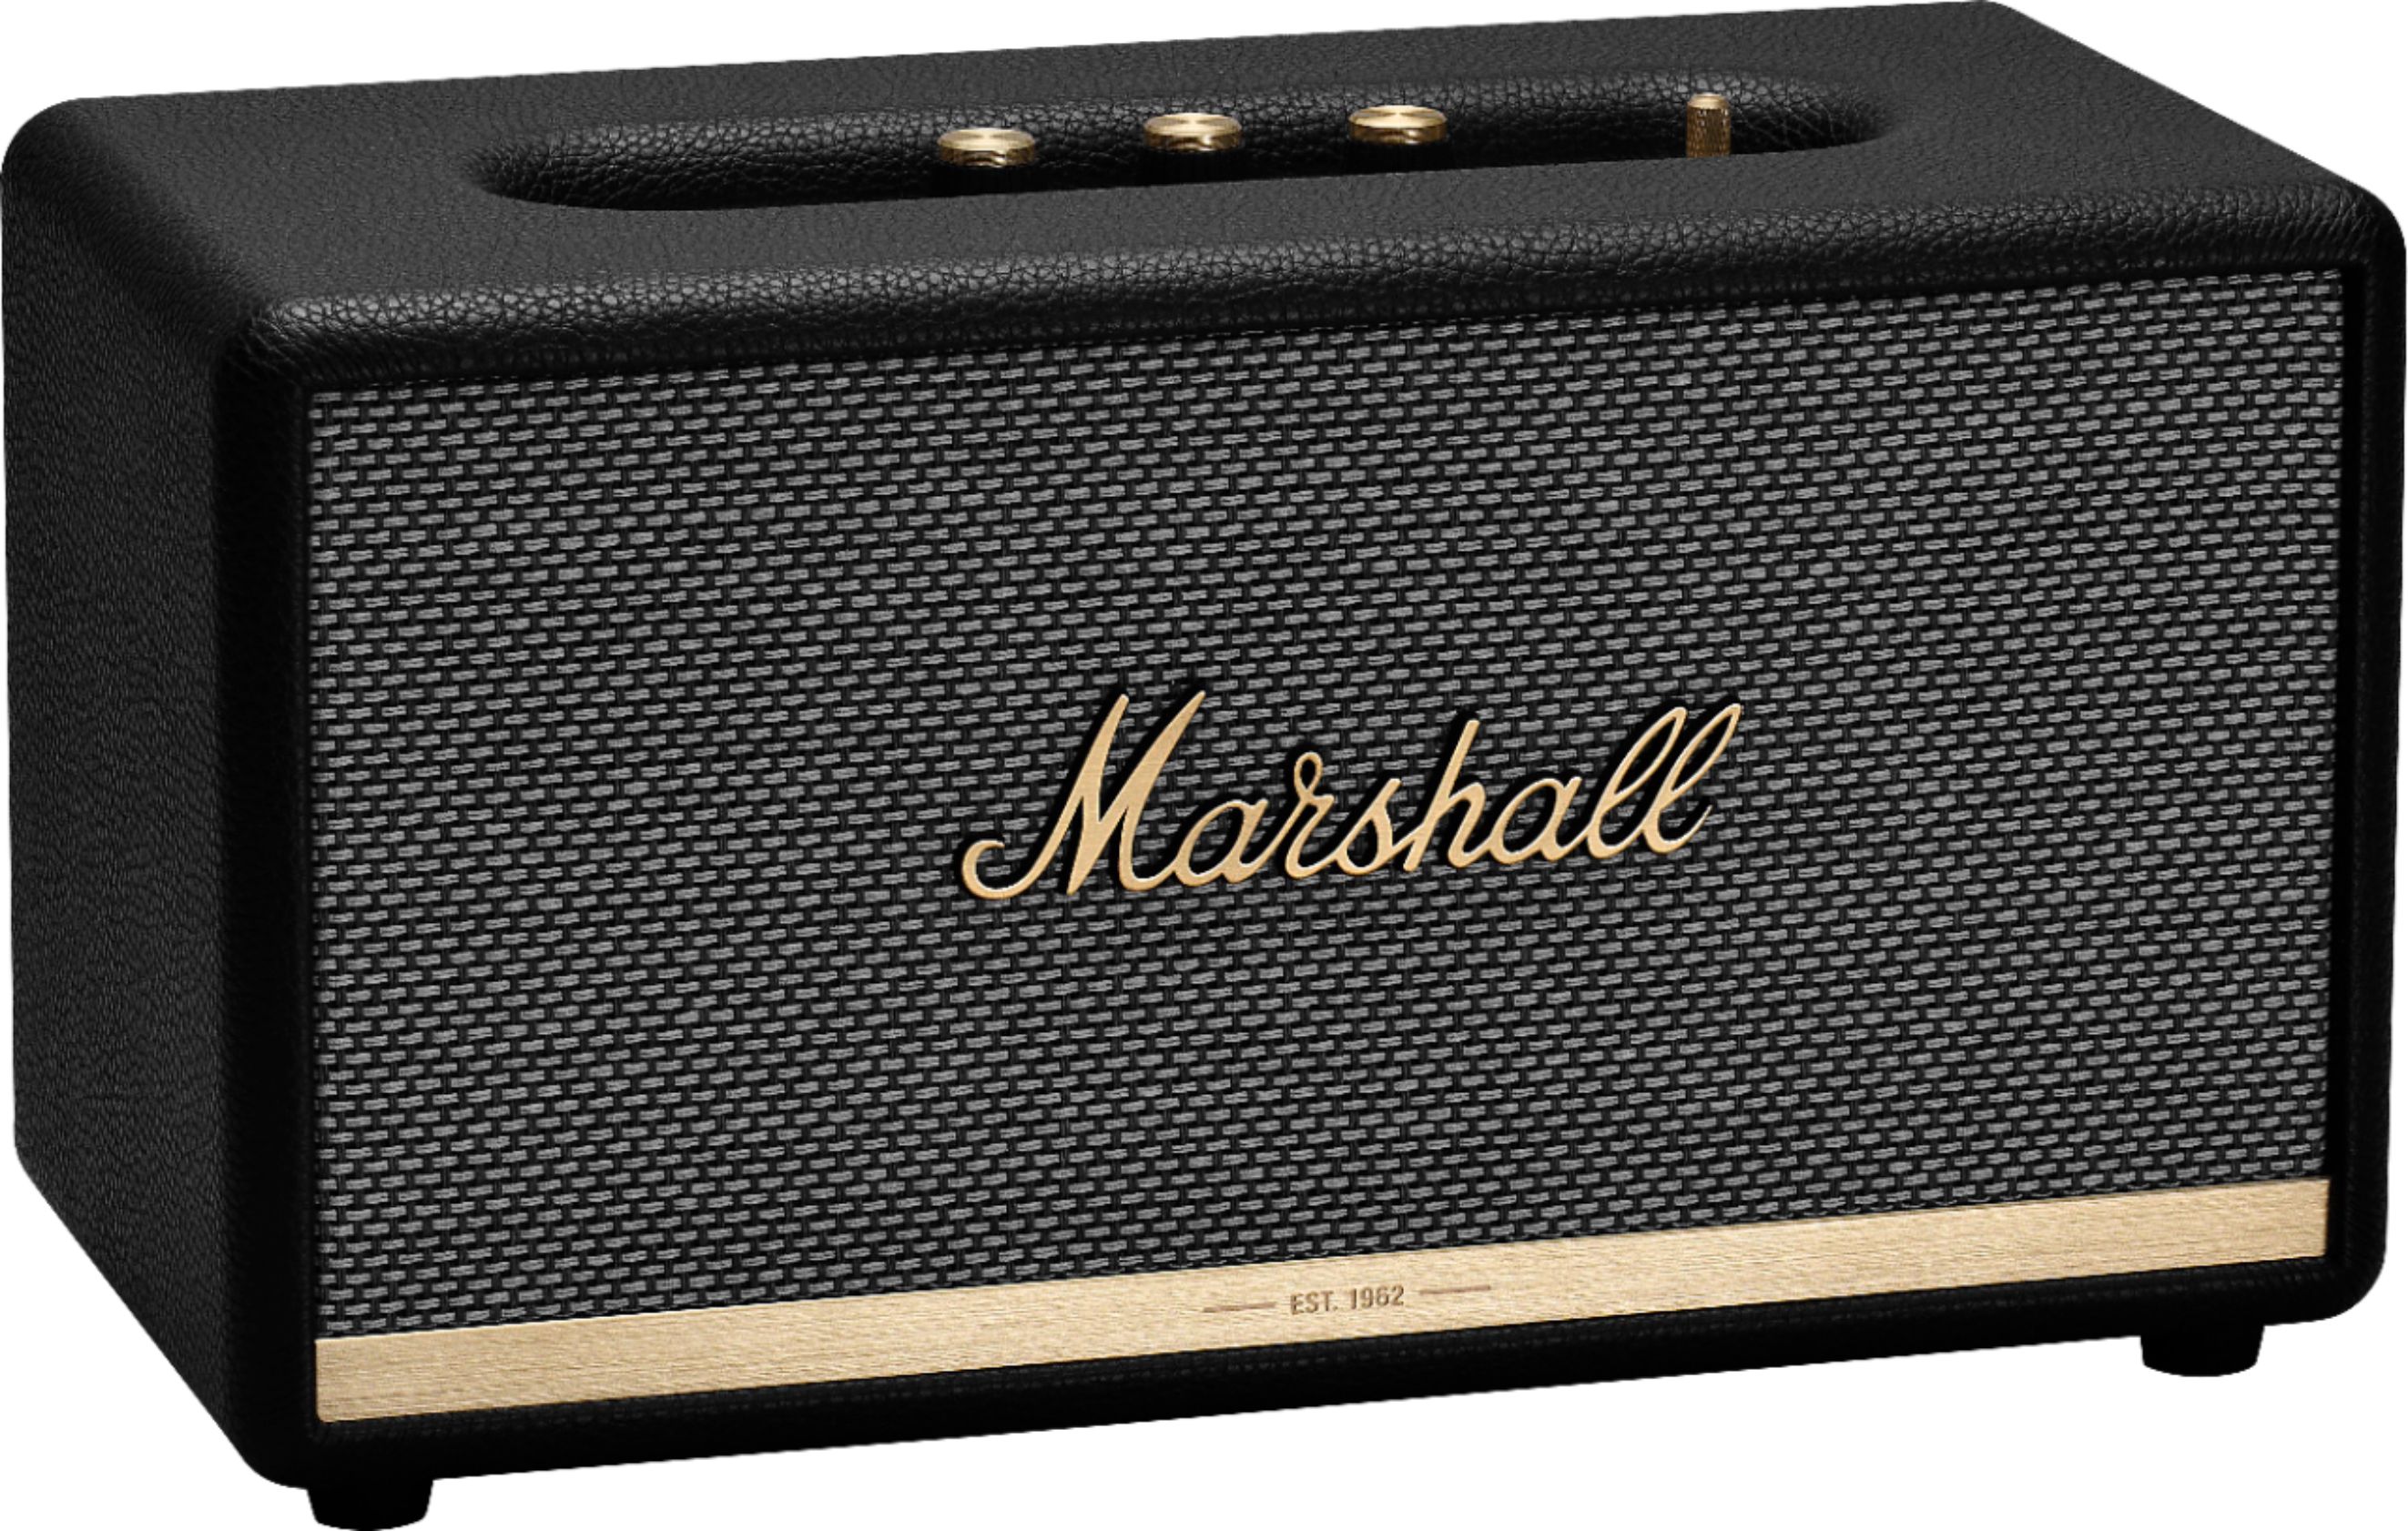 Angle View: Marshall - Stanmore II Bluetooth Speaker - Black